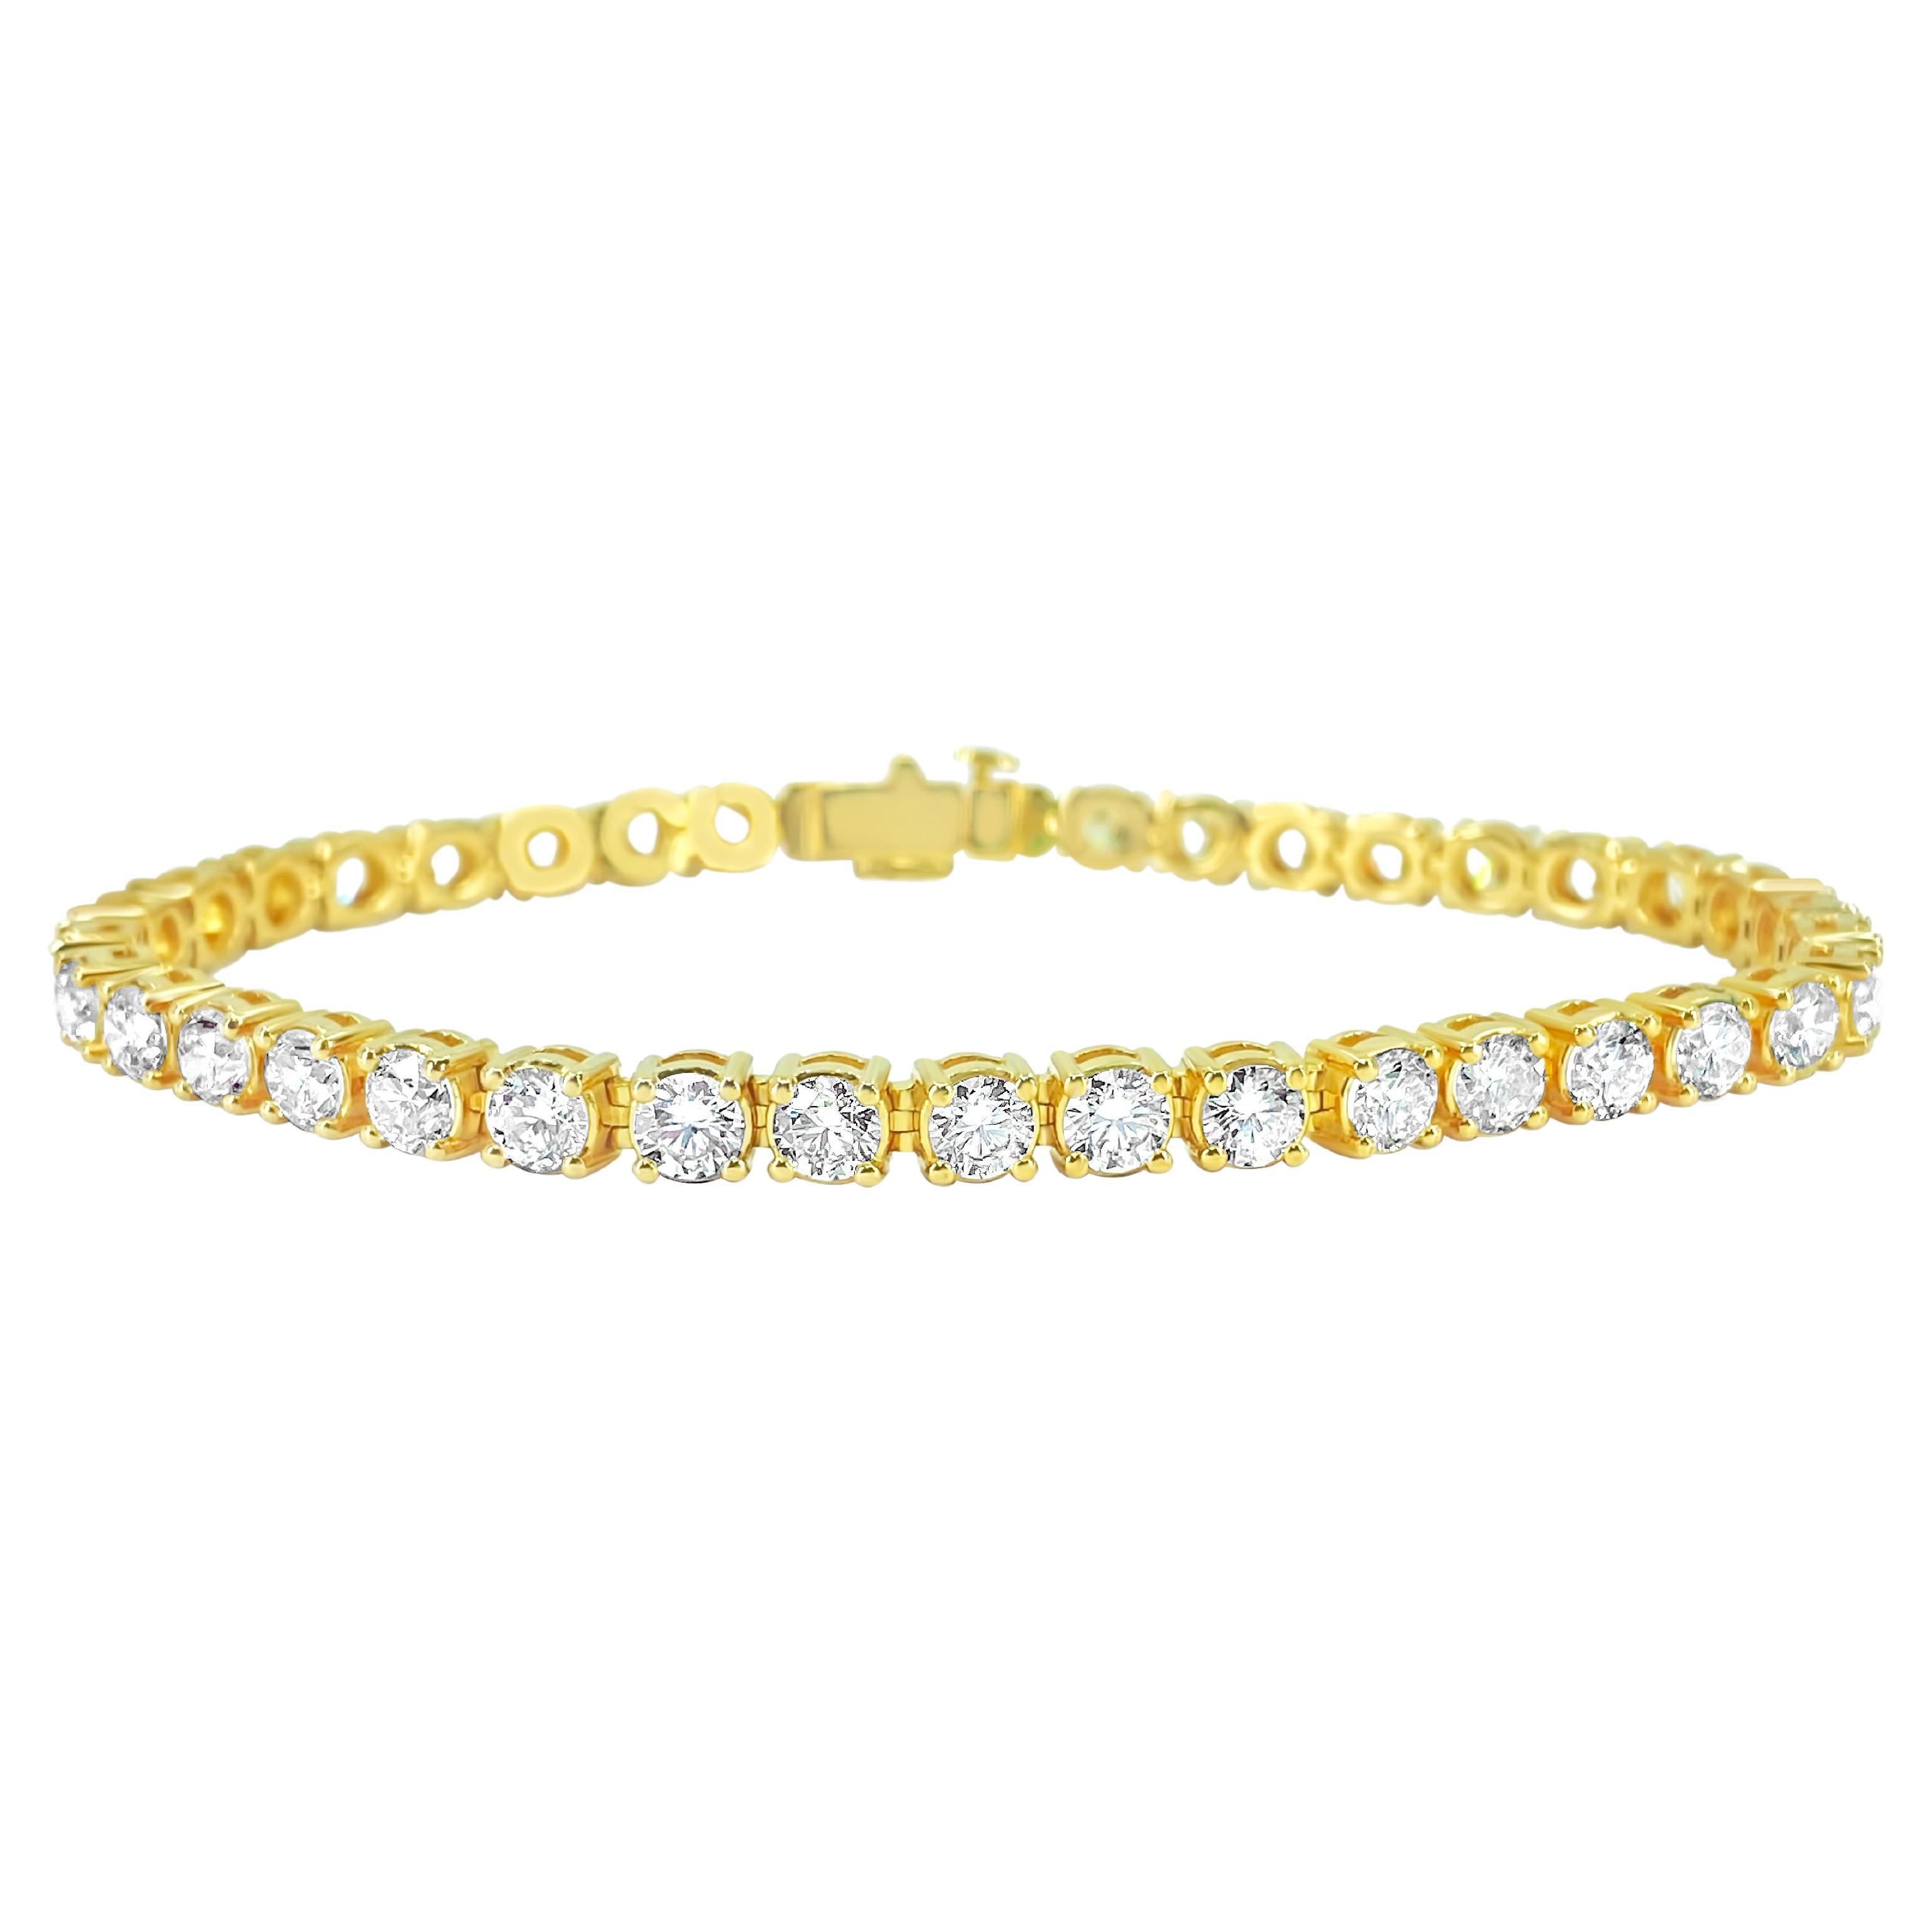 12.33 Carat Diamond Tennis Bracelet in 14k Gold